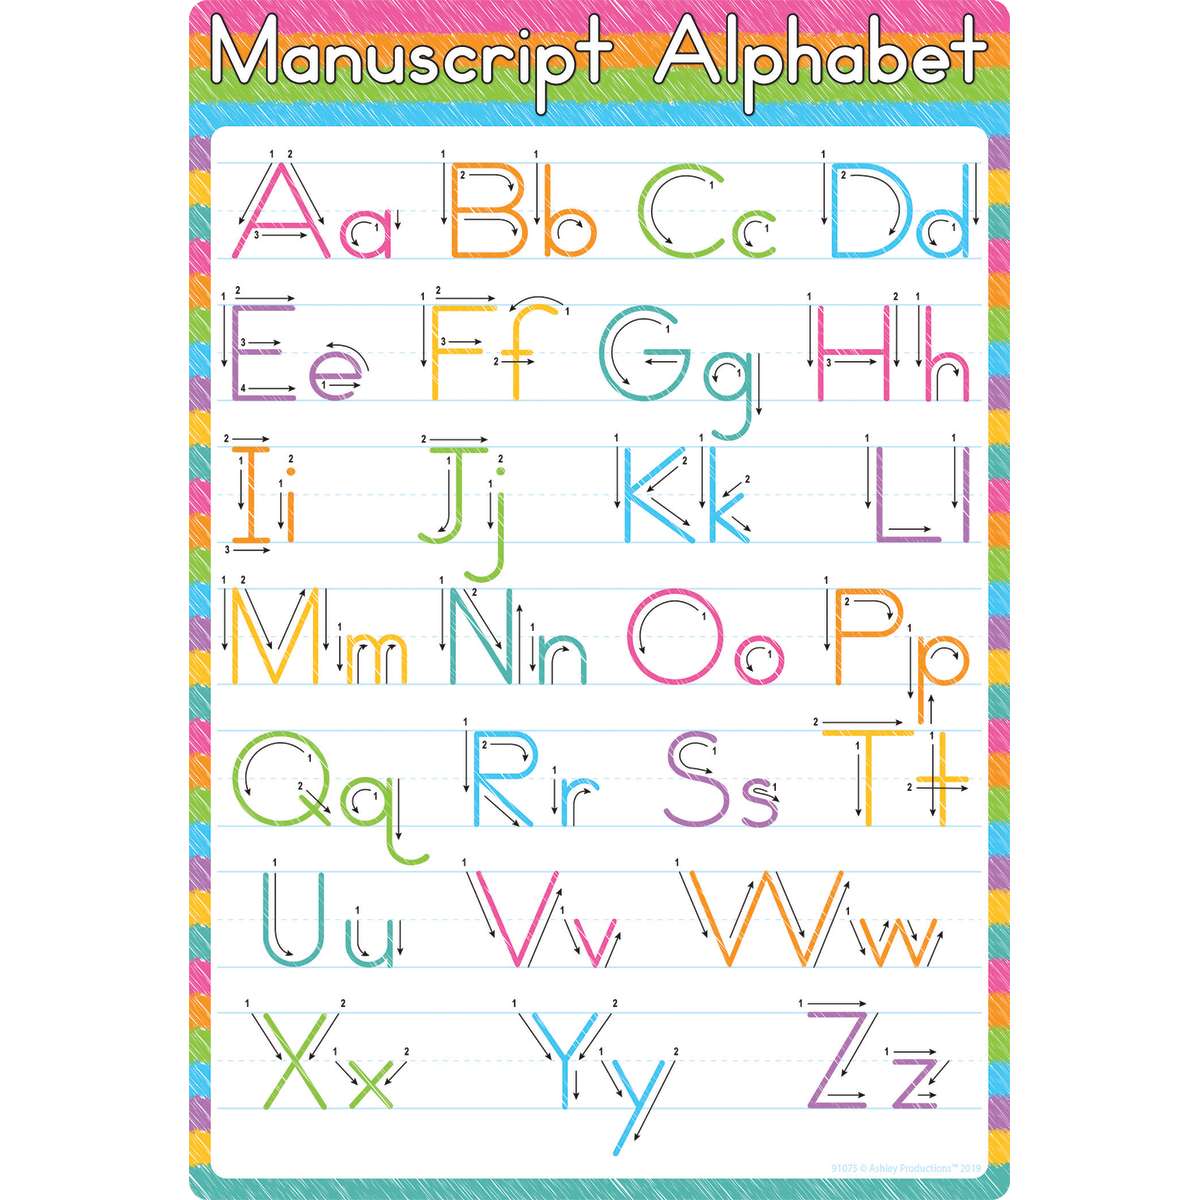 manuscript-alphabet-13-x-19-smart-poly-chart-ash91075